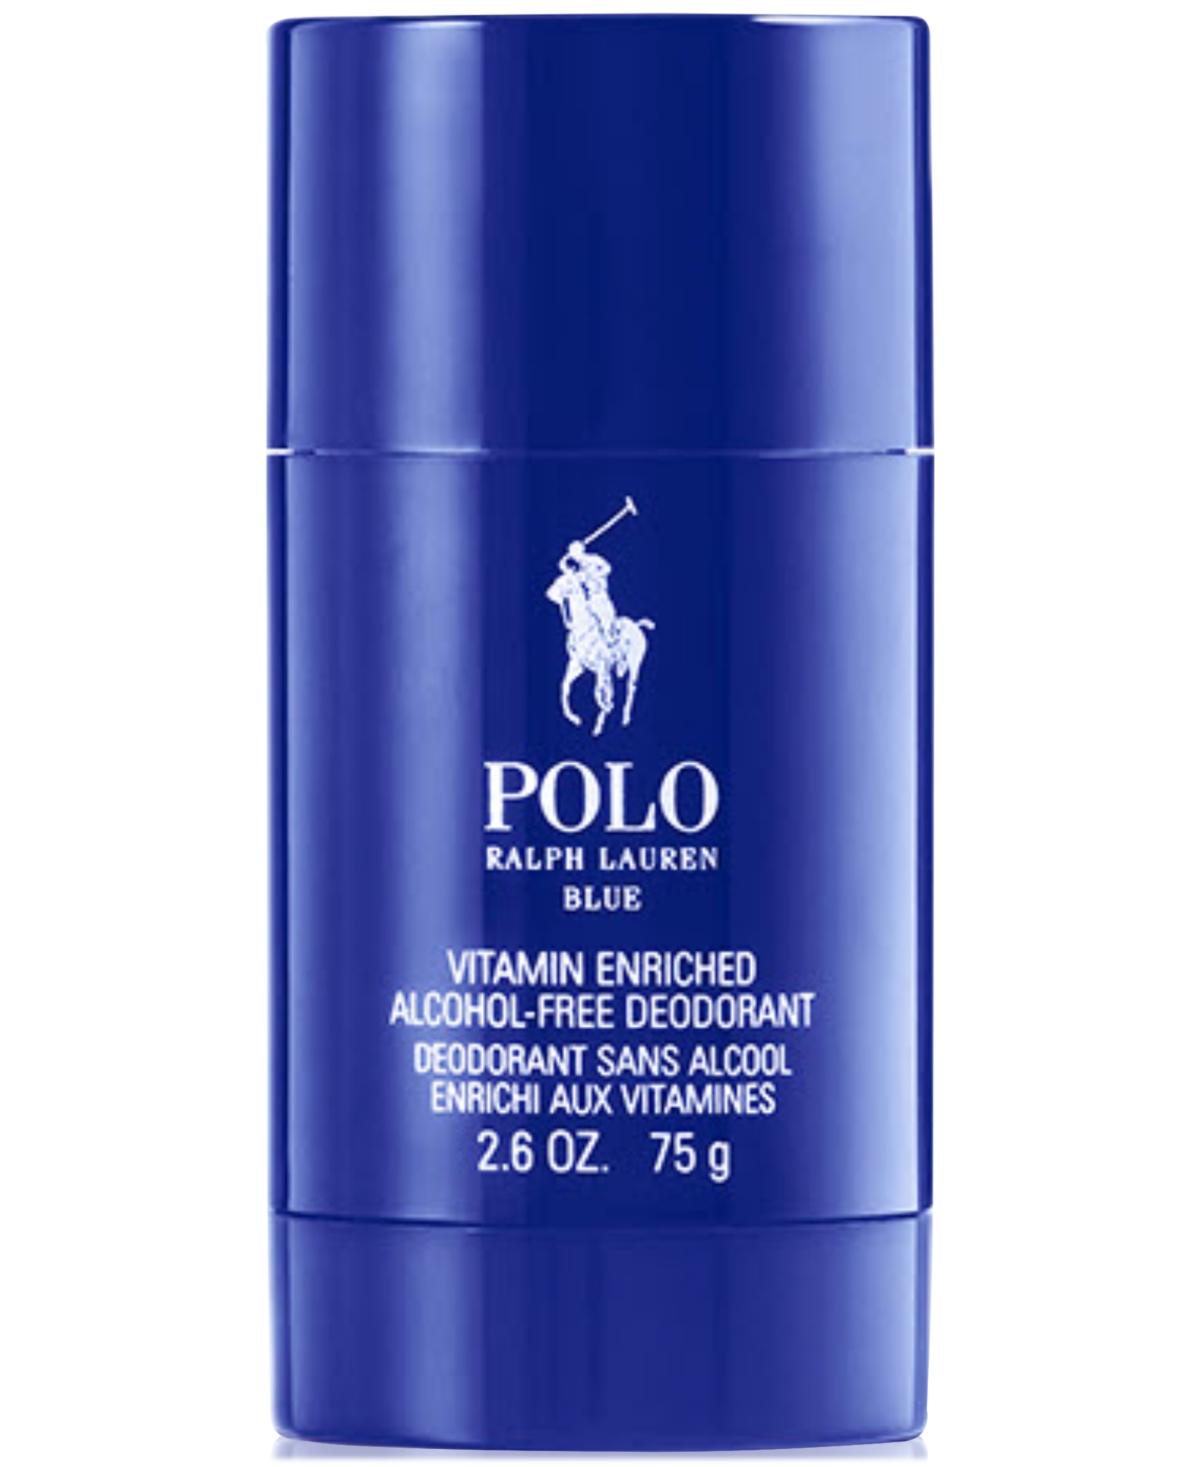 Ralph Lauren Polo Blue Deodorant Stick, 2.6 oz